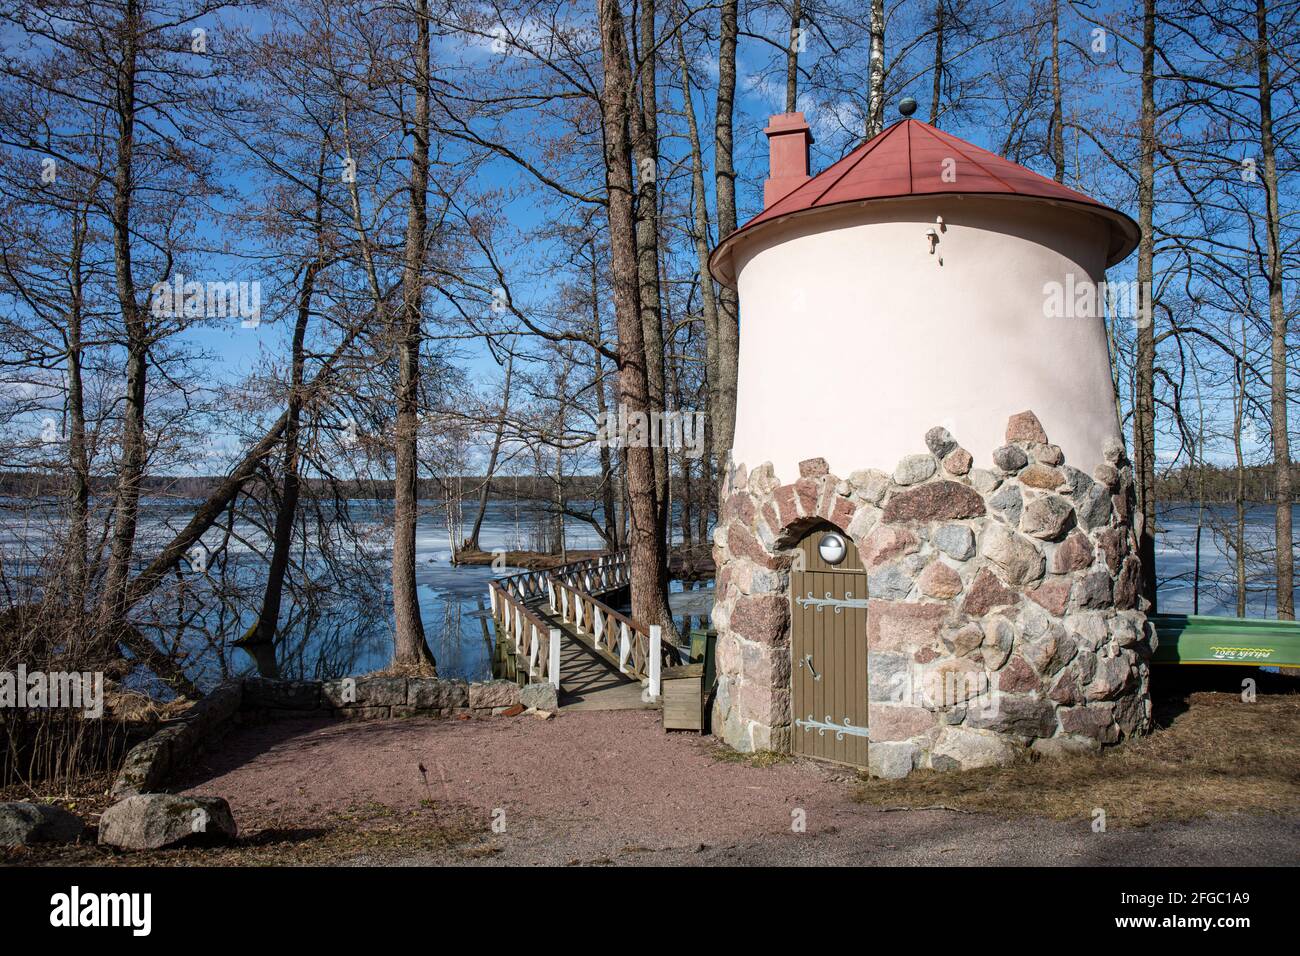 Villa Hvittorp's National Romantic style shed by lake Vitträsk in Kirkkonummi, Finland Stock Photo